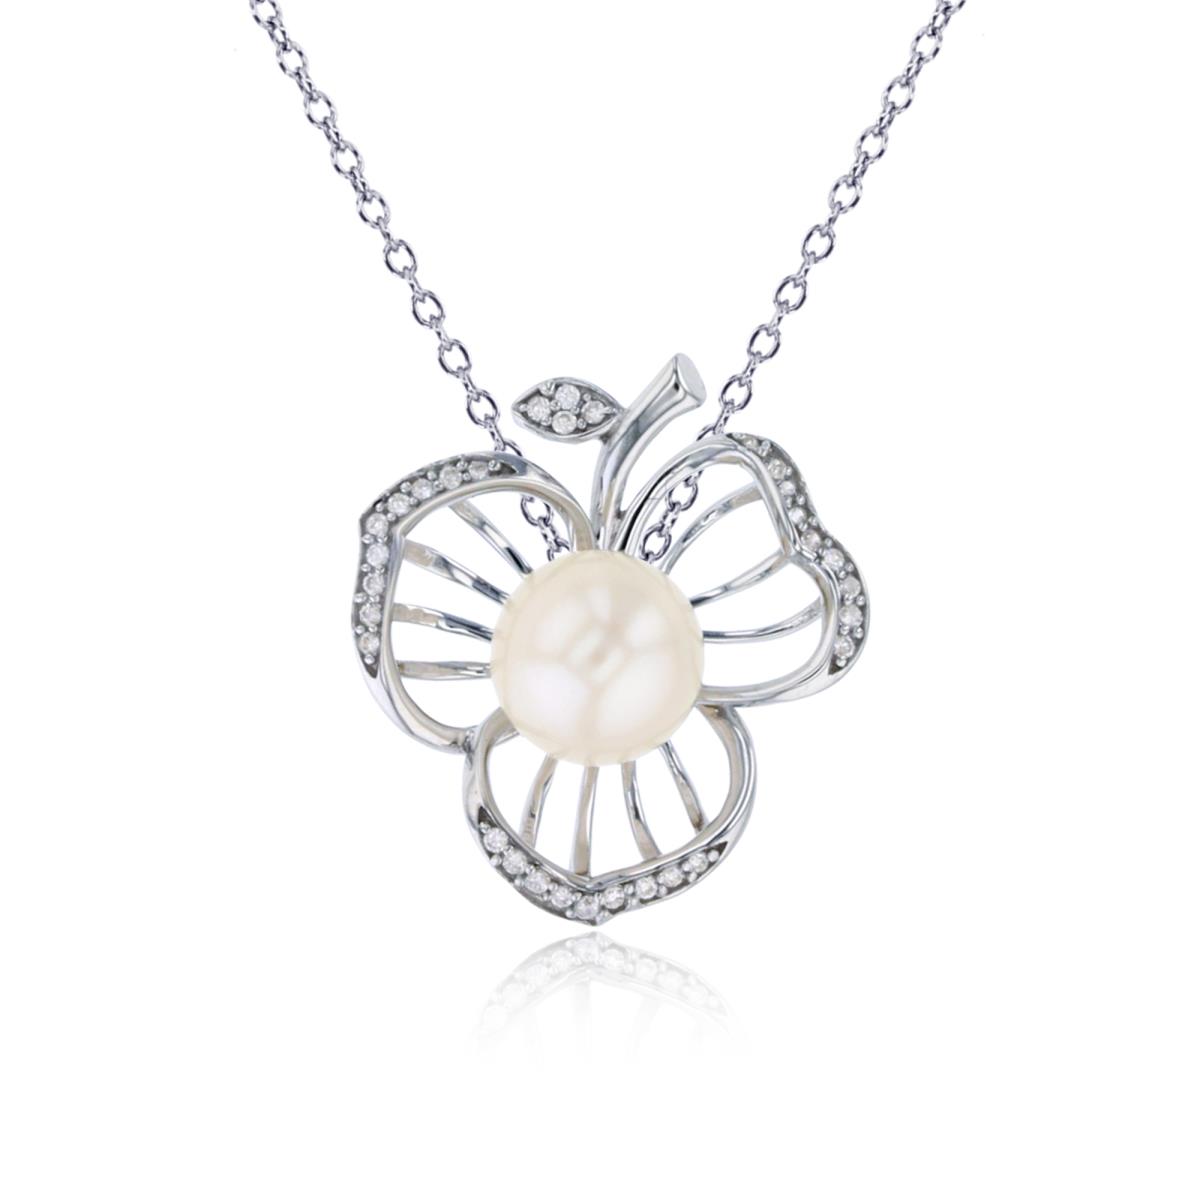 10K White Gold 0.10CTTW Rnd Diamonds & 7mm White Pearl Flower 18"Necklace